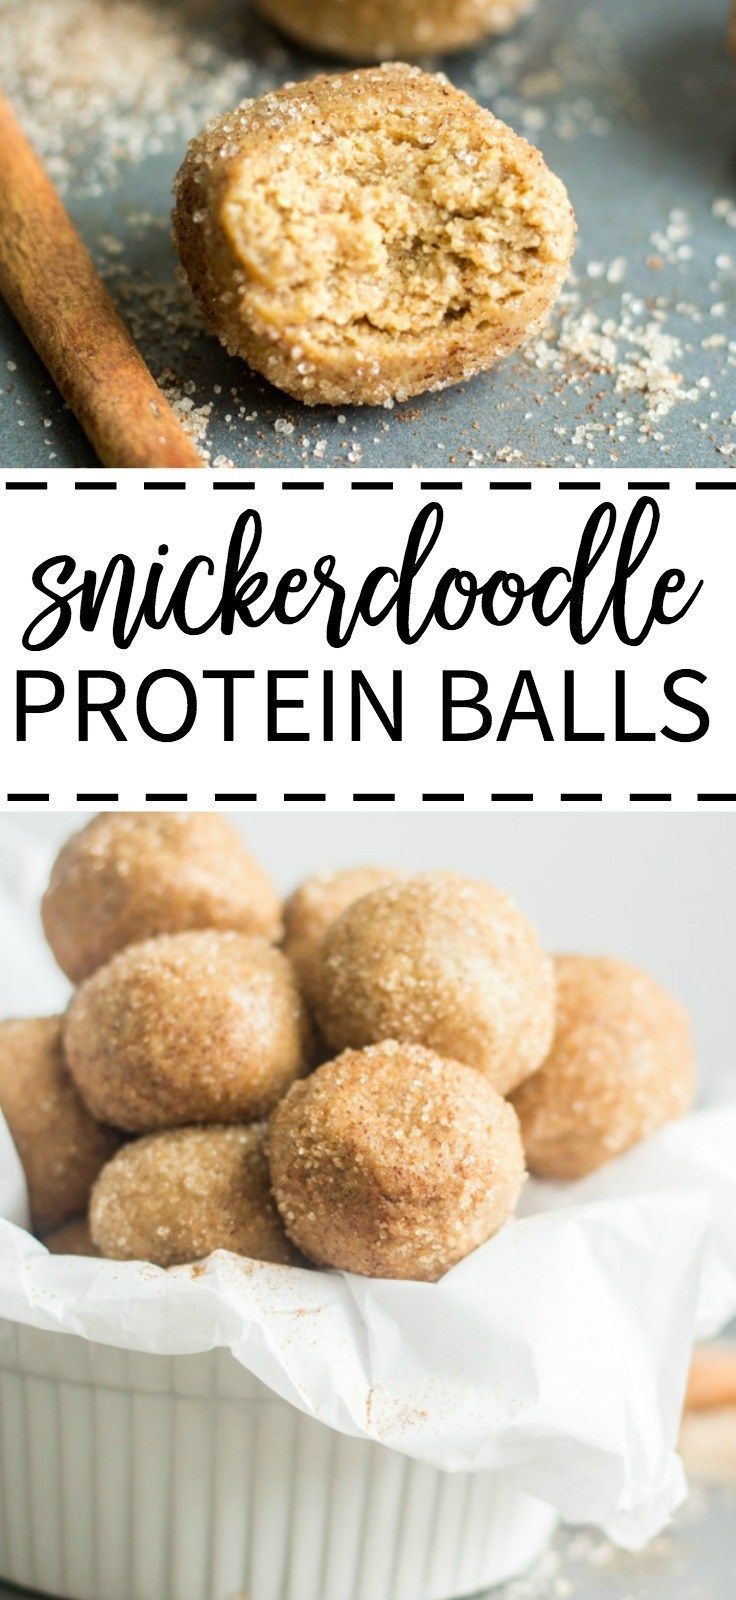 Snickerdoodle Protein Balls [Gluten Free] -   19 fitness gifts gluten free
 ideas